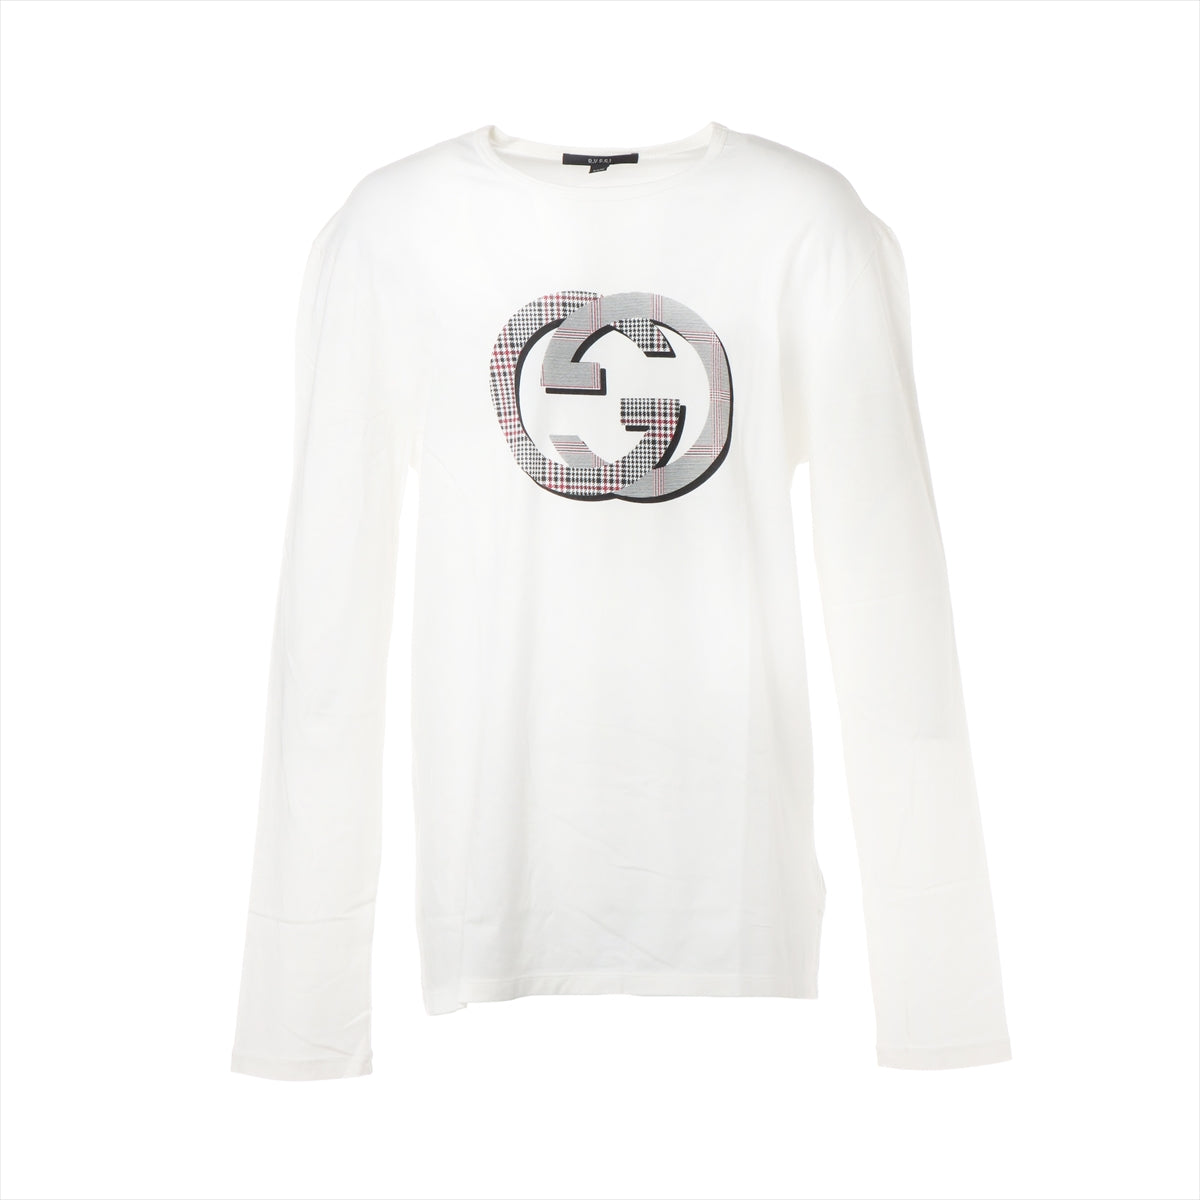 Gucci Interlocking G Cotton Long T shirts XXXL Men's White  368729